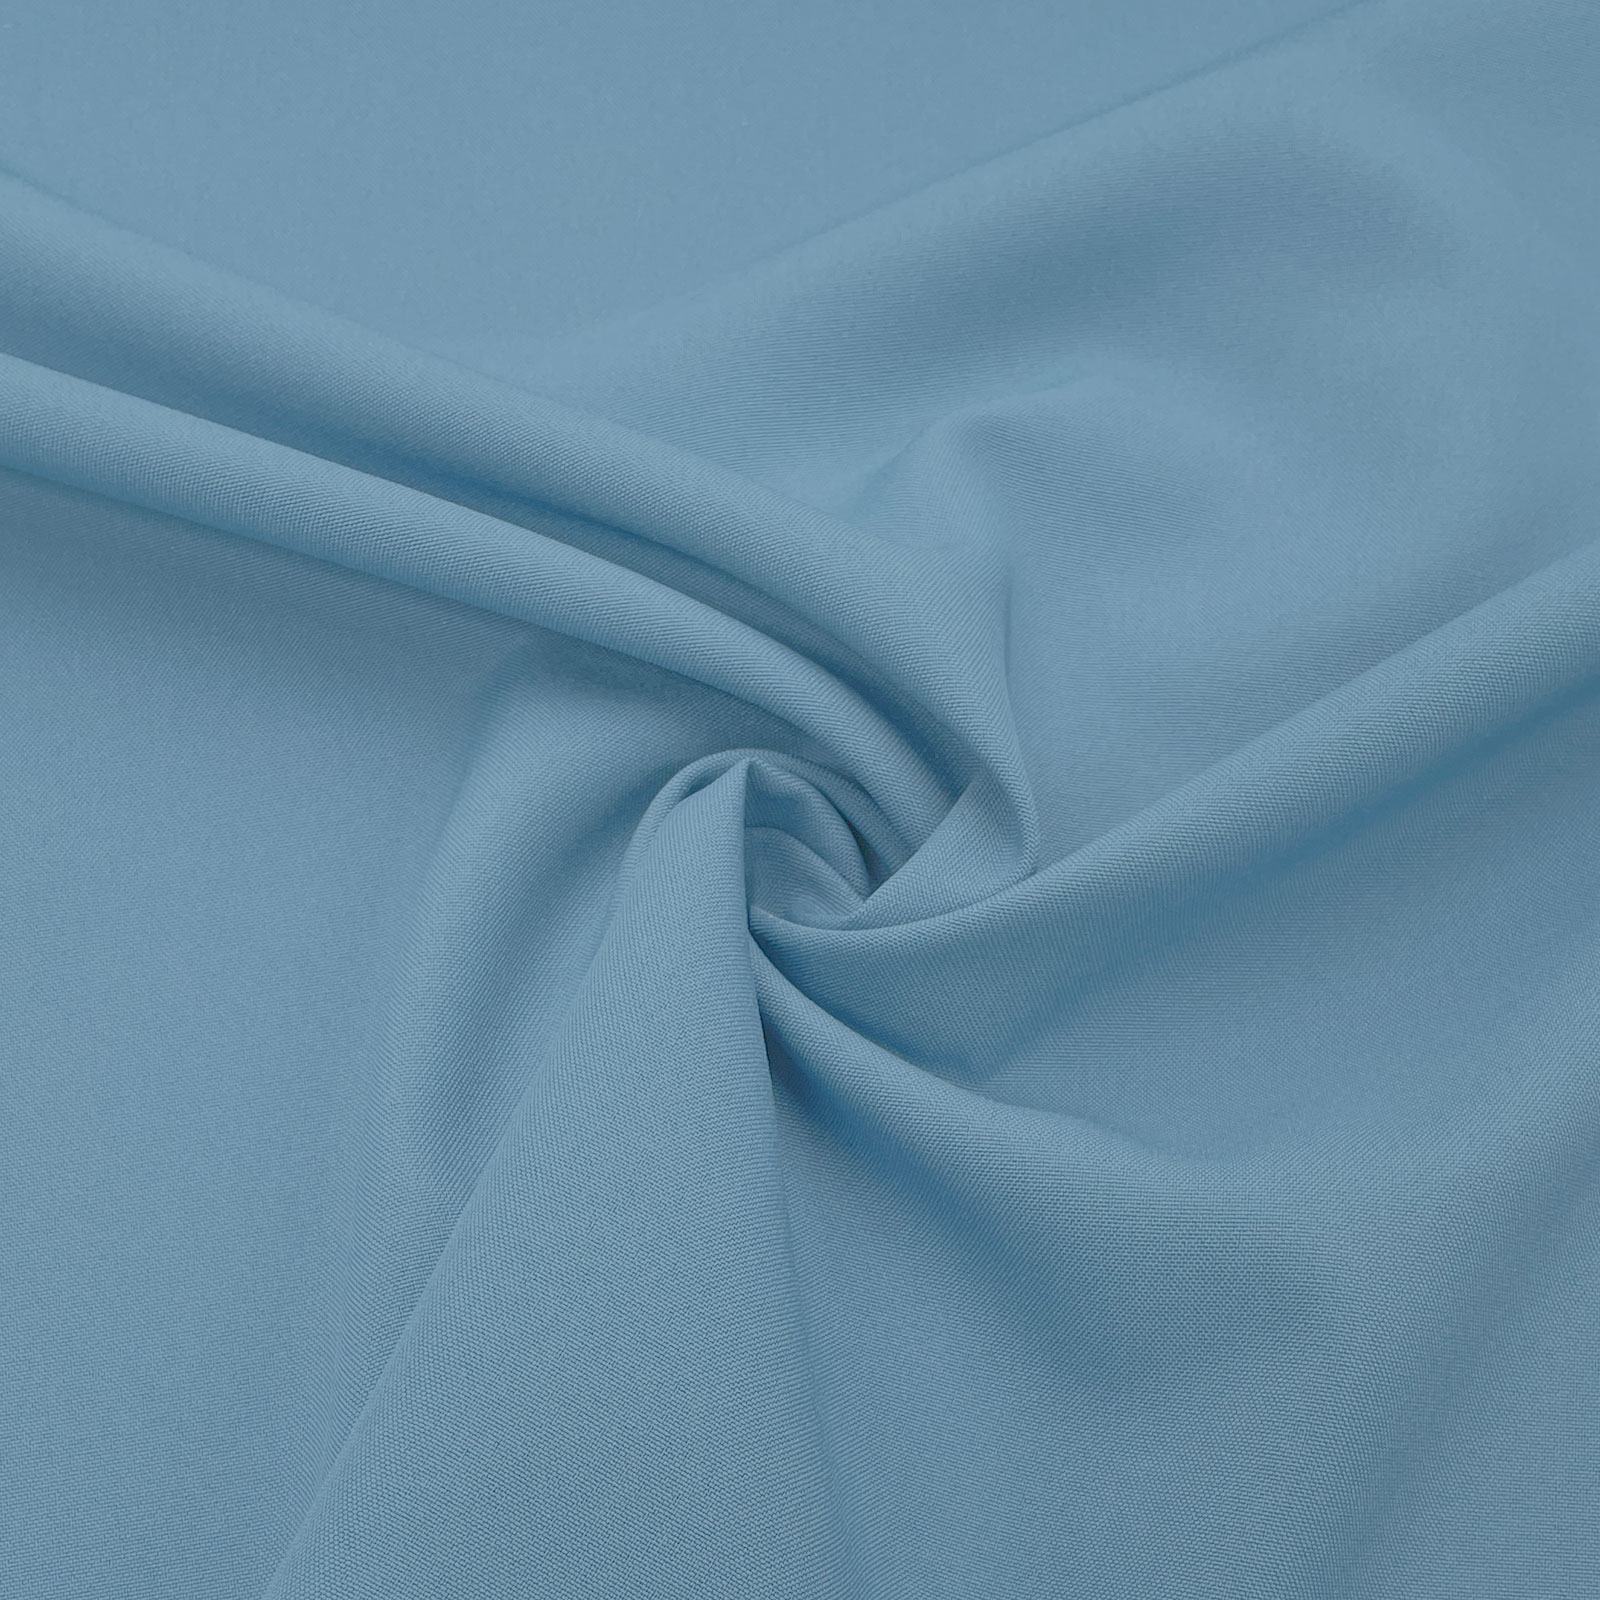 Trekking Functional fabric - slightly elastic & breathable - Sweden Blue